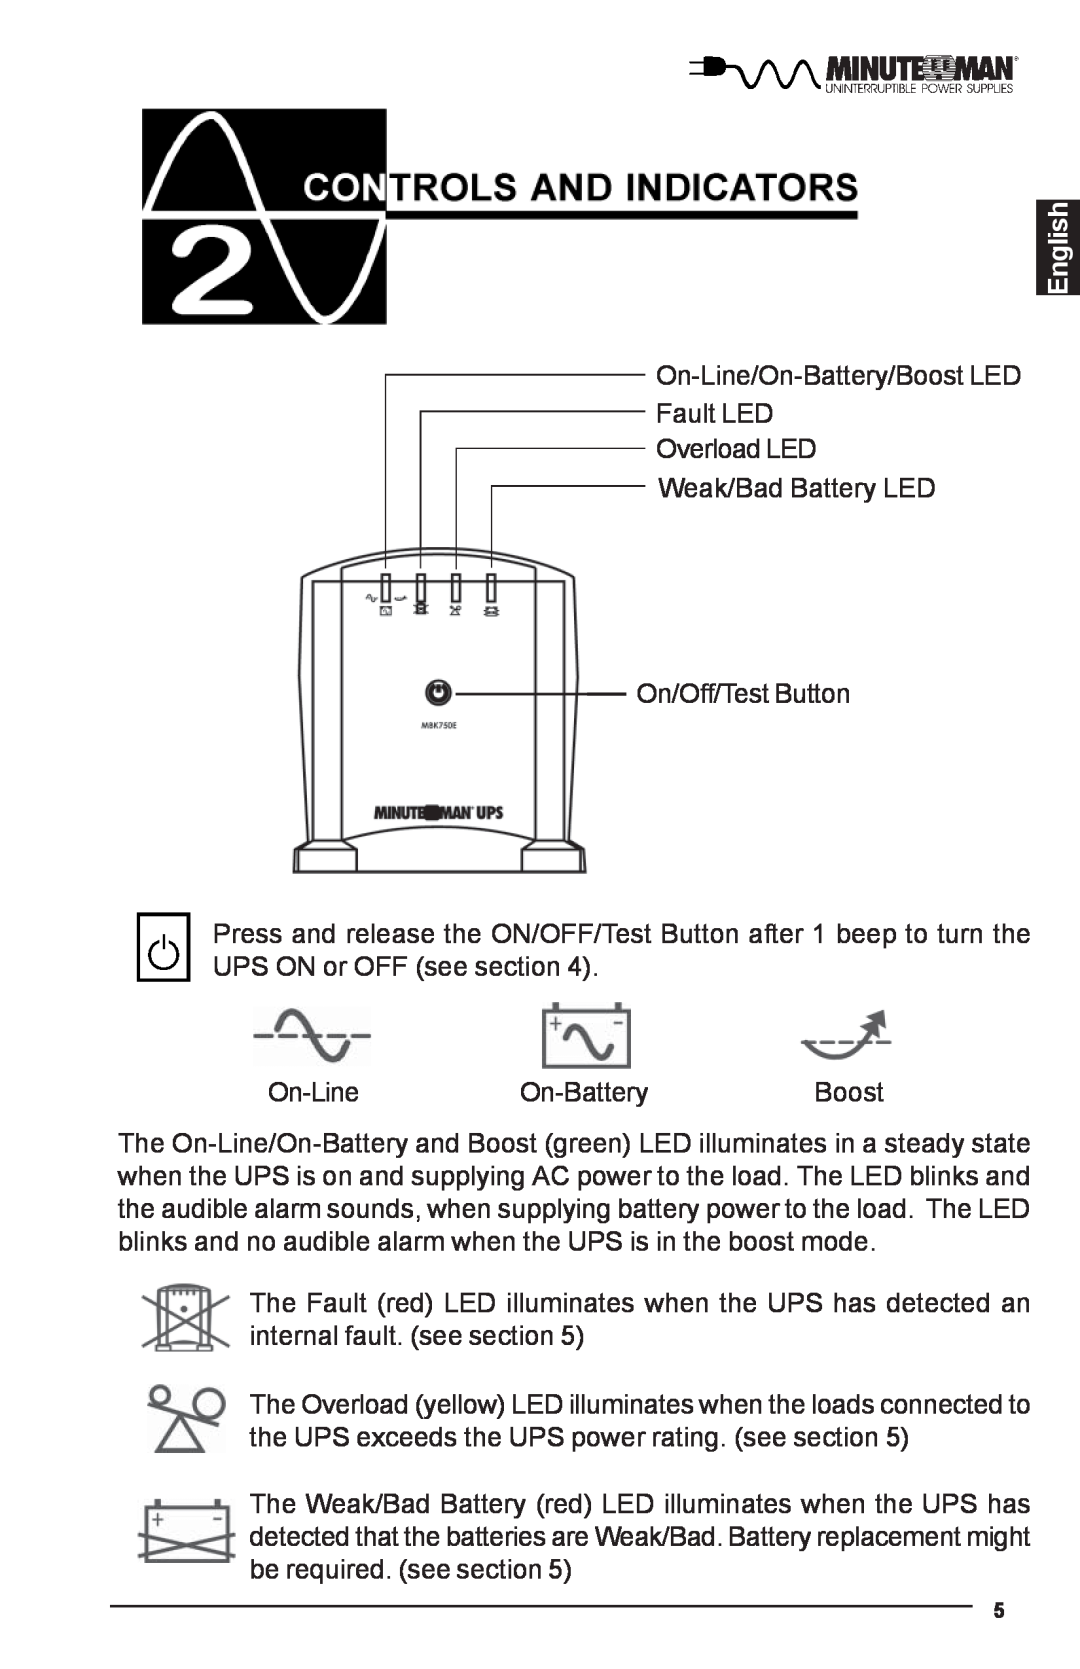 Minuteman UPS MBK-E SERIES user manual English, On-Line/On-Battery/Boost LED Fault LED Overload LED 